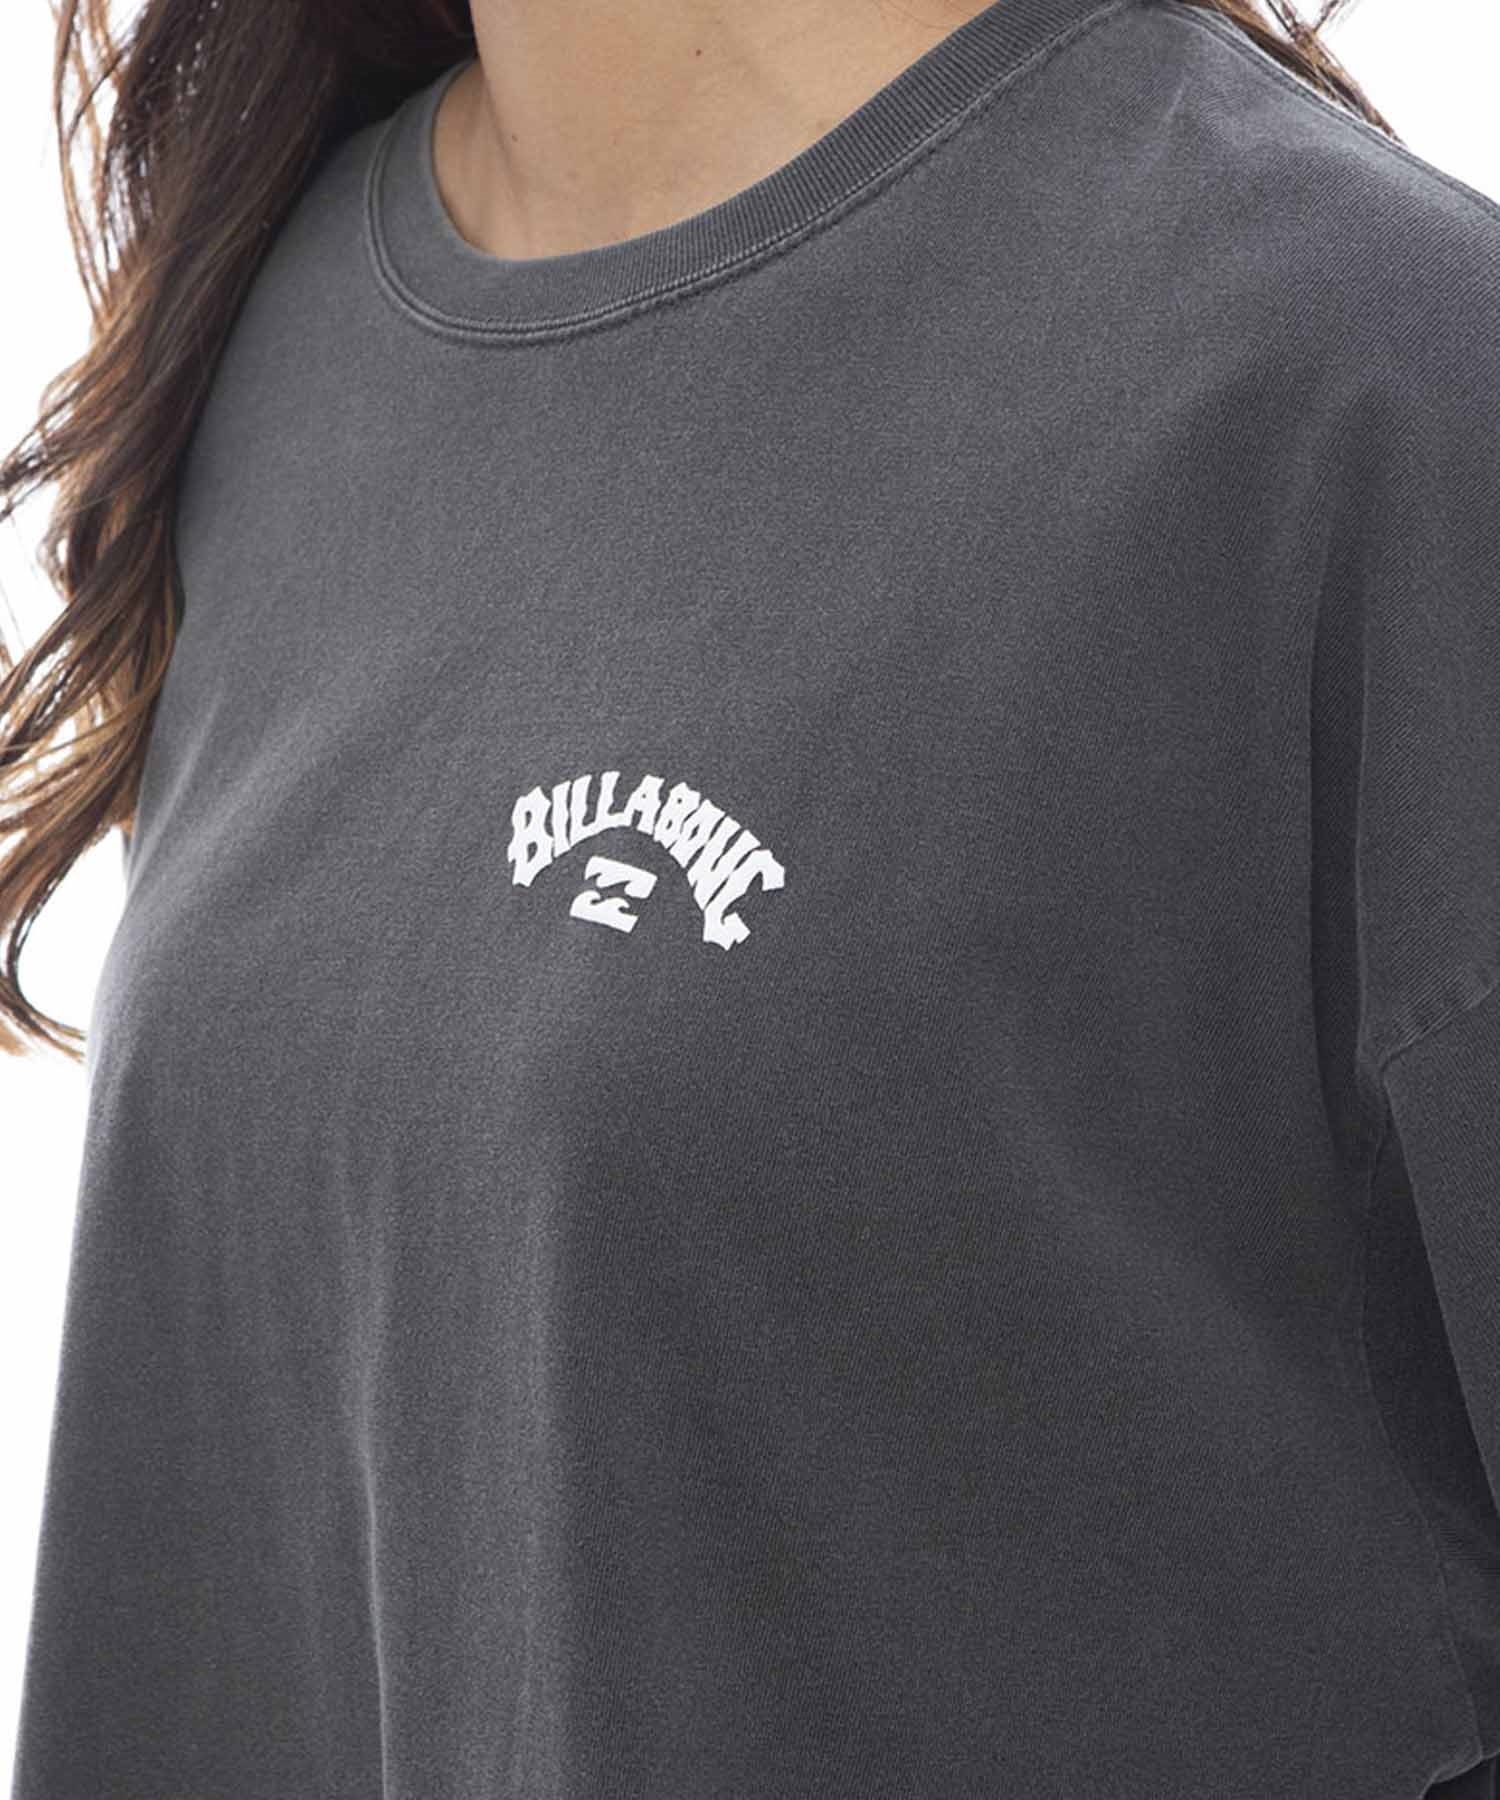 BILLABONG ビラボン ARCH LOGO WIDE LOOSE CROPED TEE レディース 半袖Tシャツ クロップド丈 BE013-206(GLC0-M)